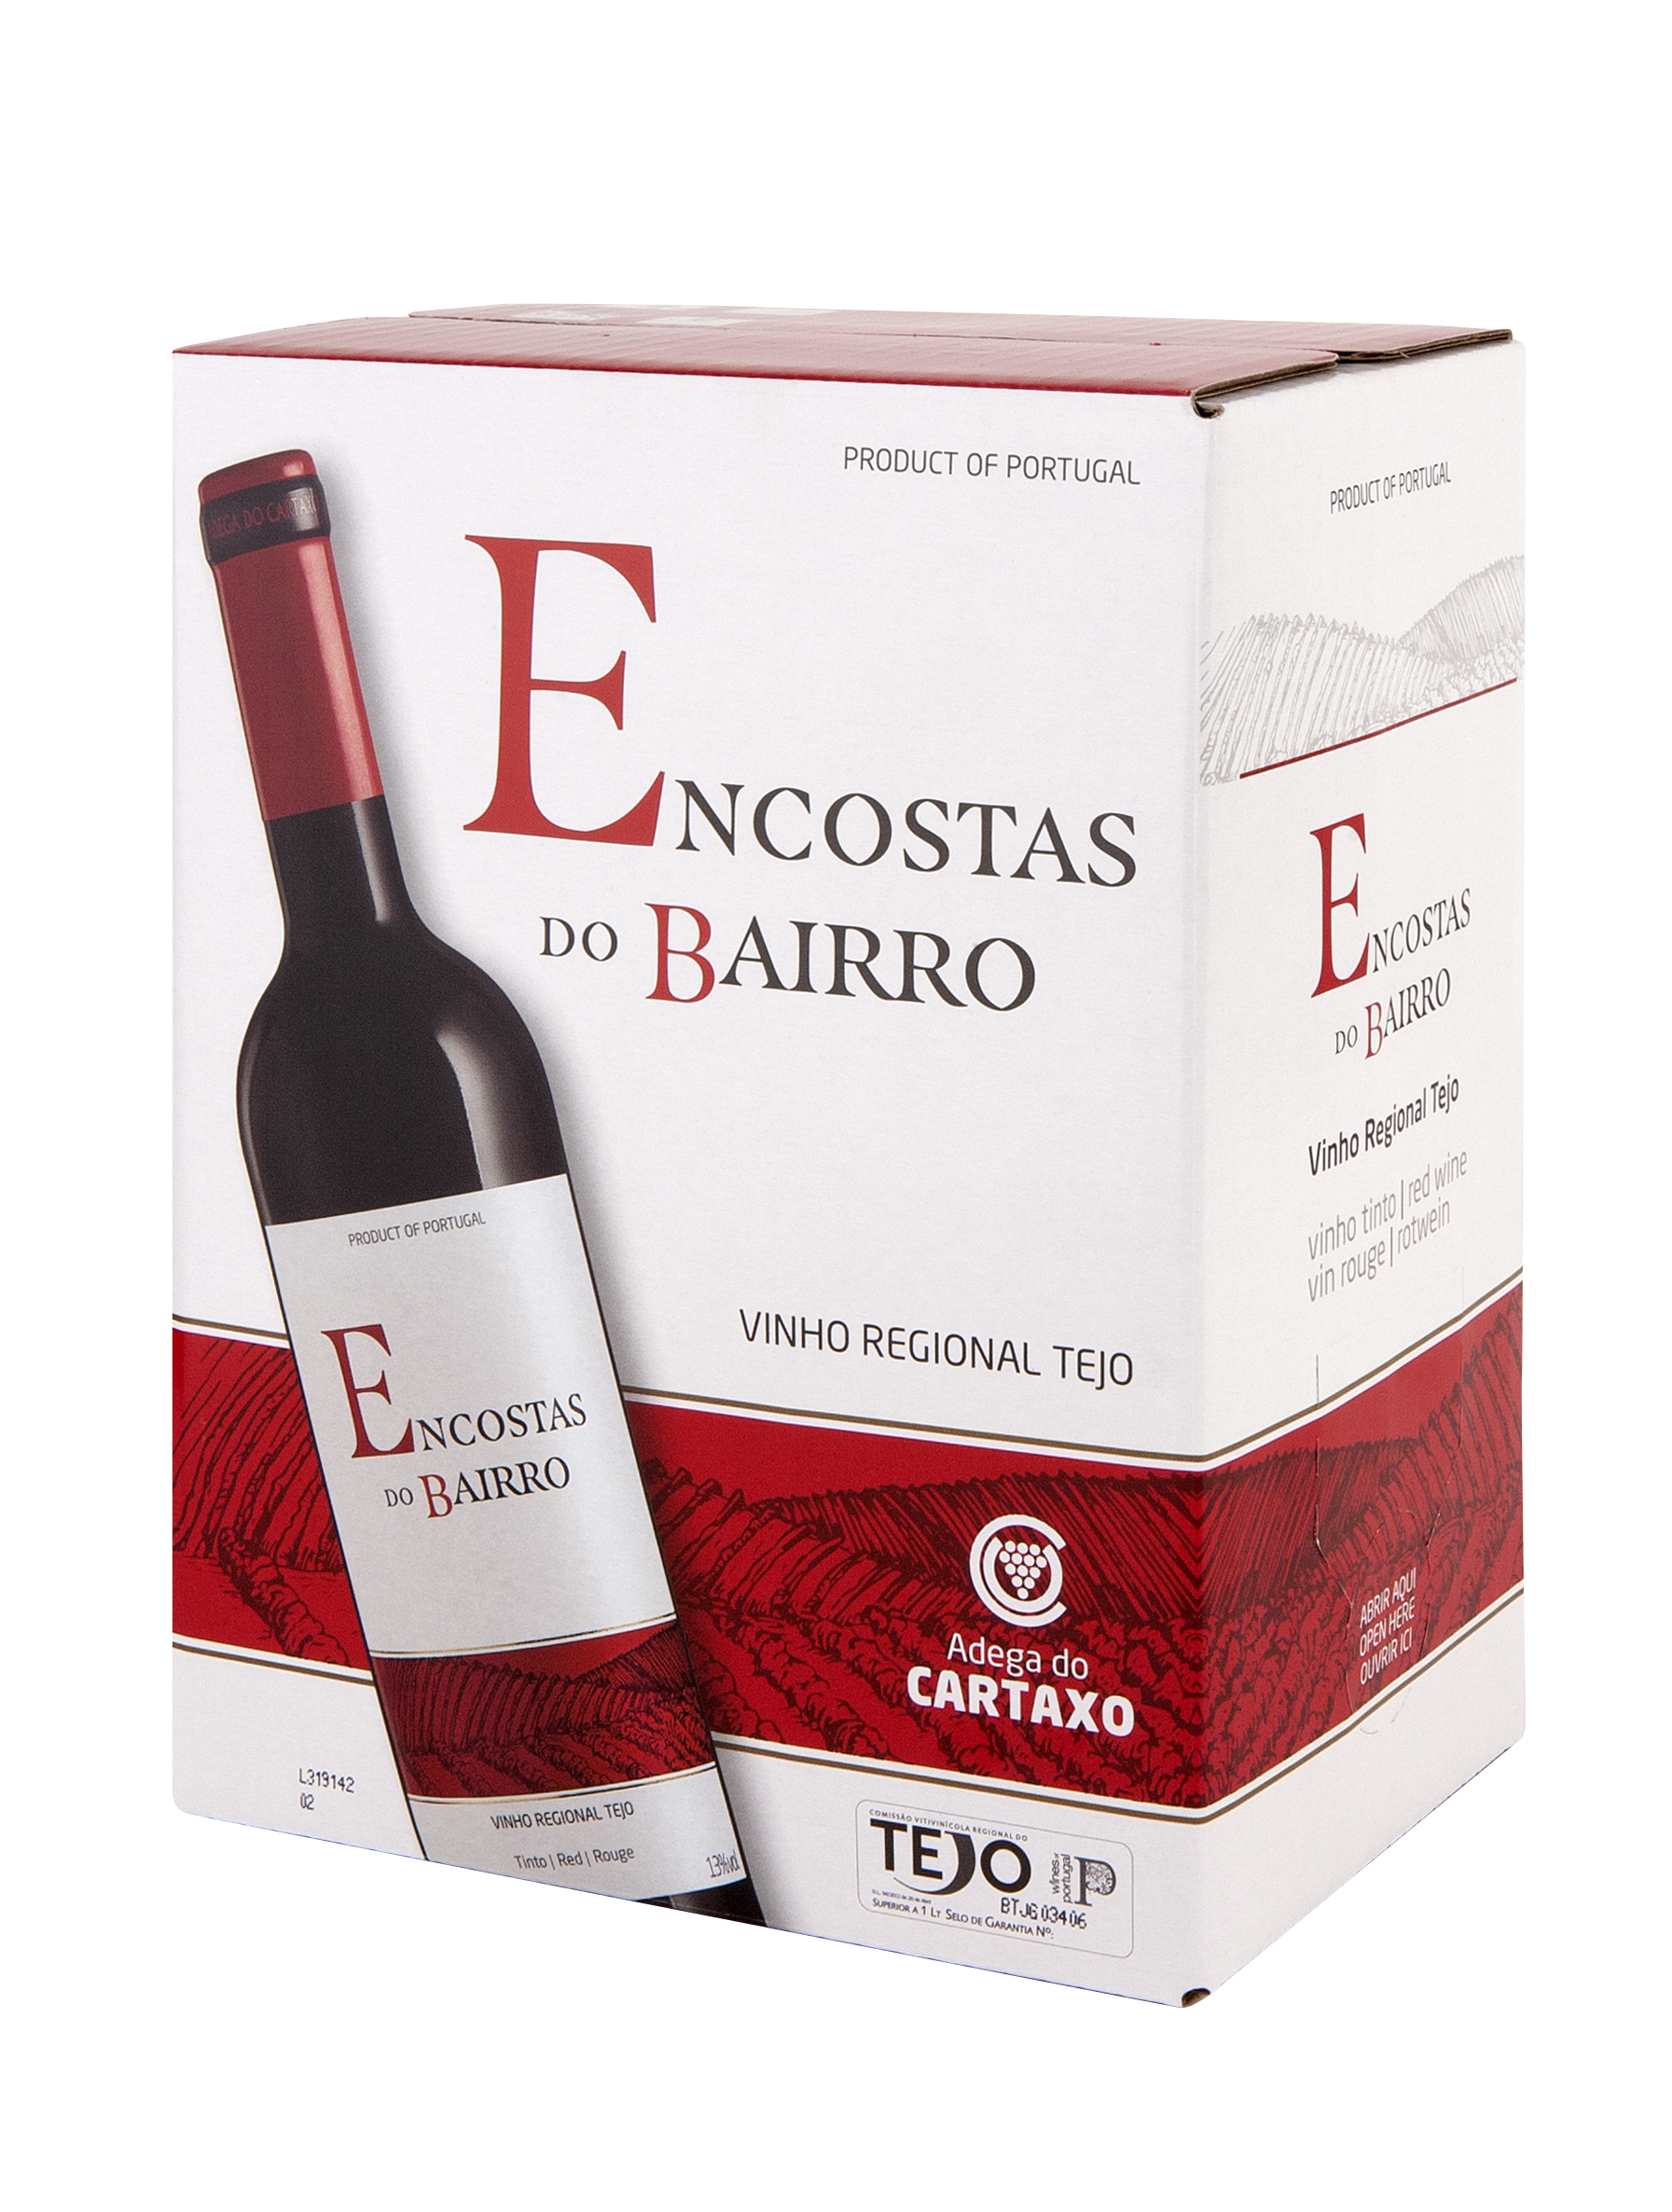 Bag in Box Encostas do Bairro Red 2020 Regional Tejo